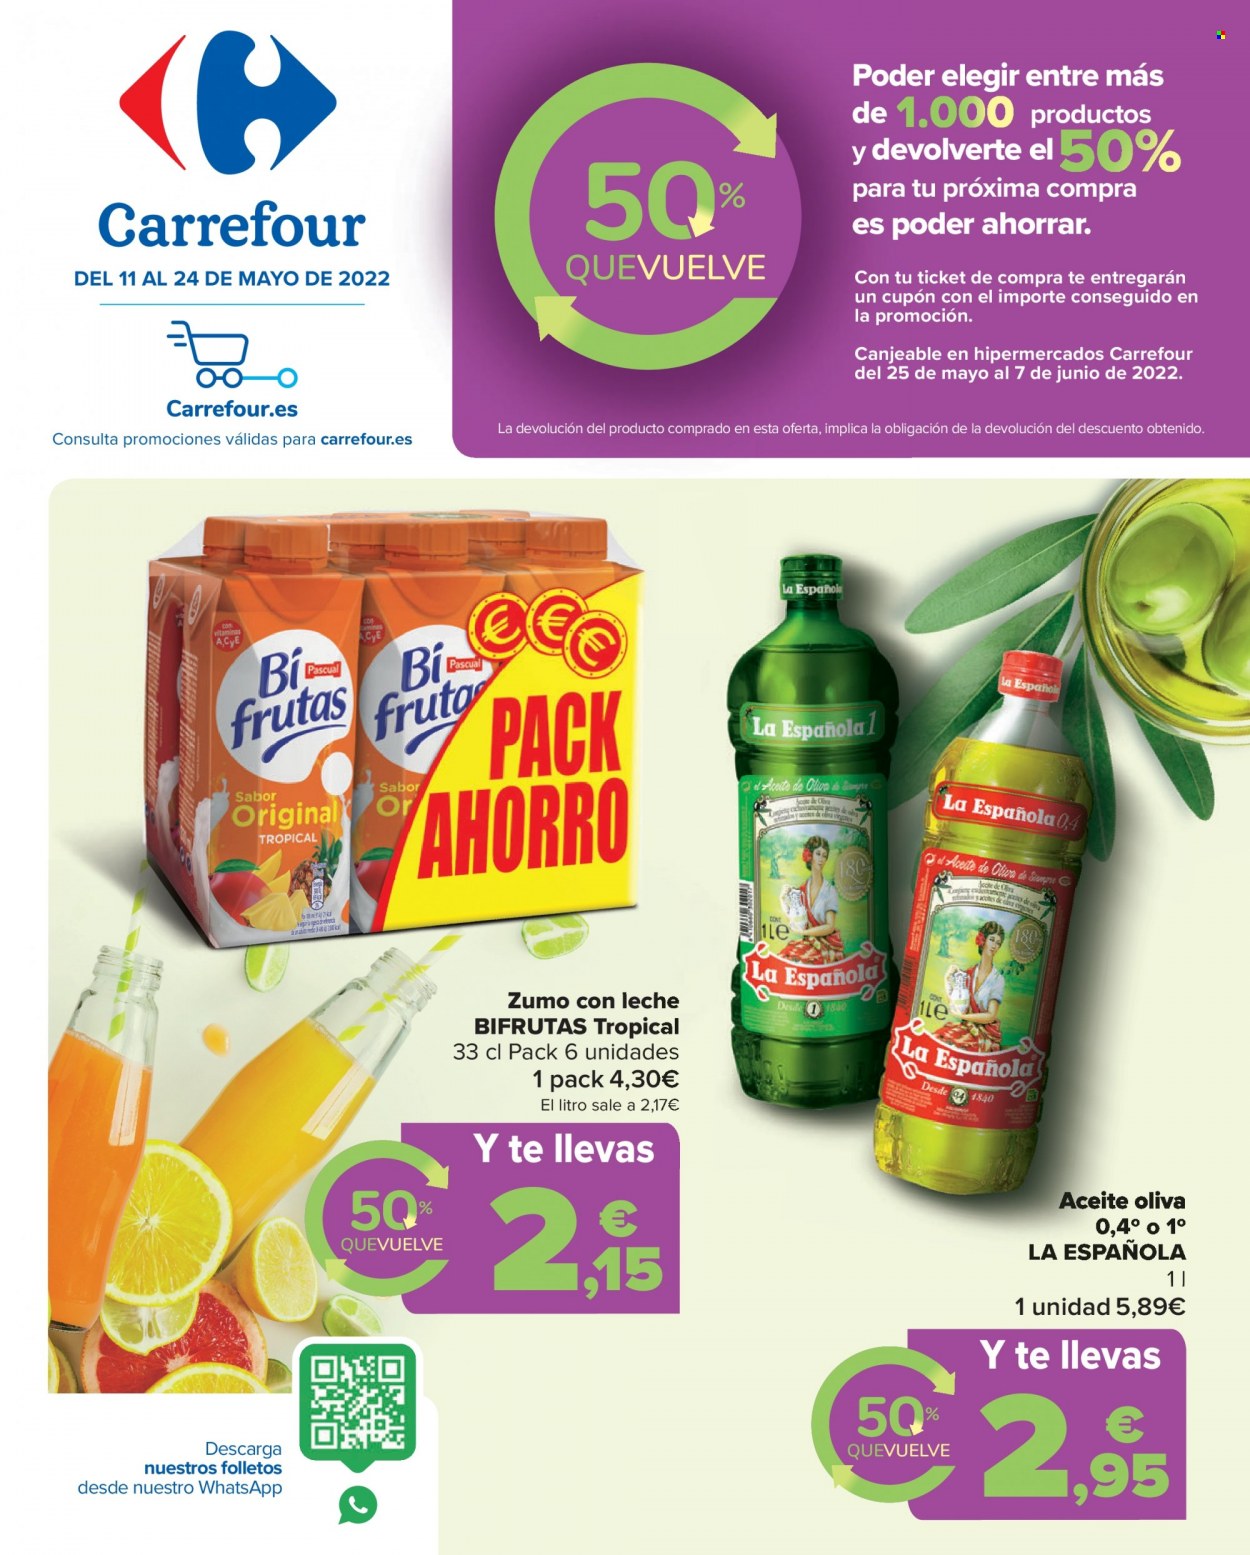 thumbnail - Folleto actual Carrefour - 11/05/22 - 24/05/22 - Ventas - aceite de oliva, zumo. Página 1.